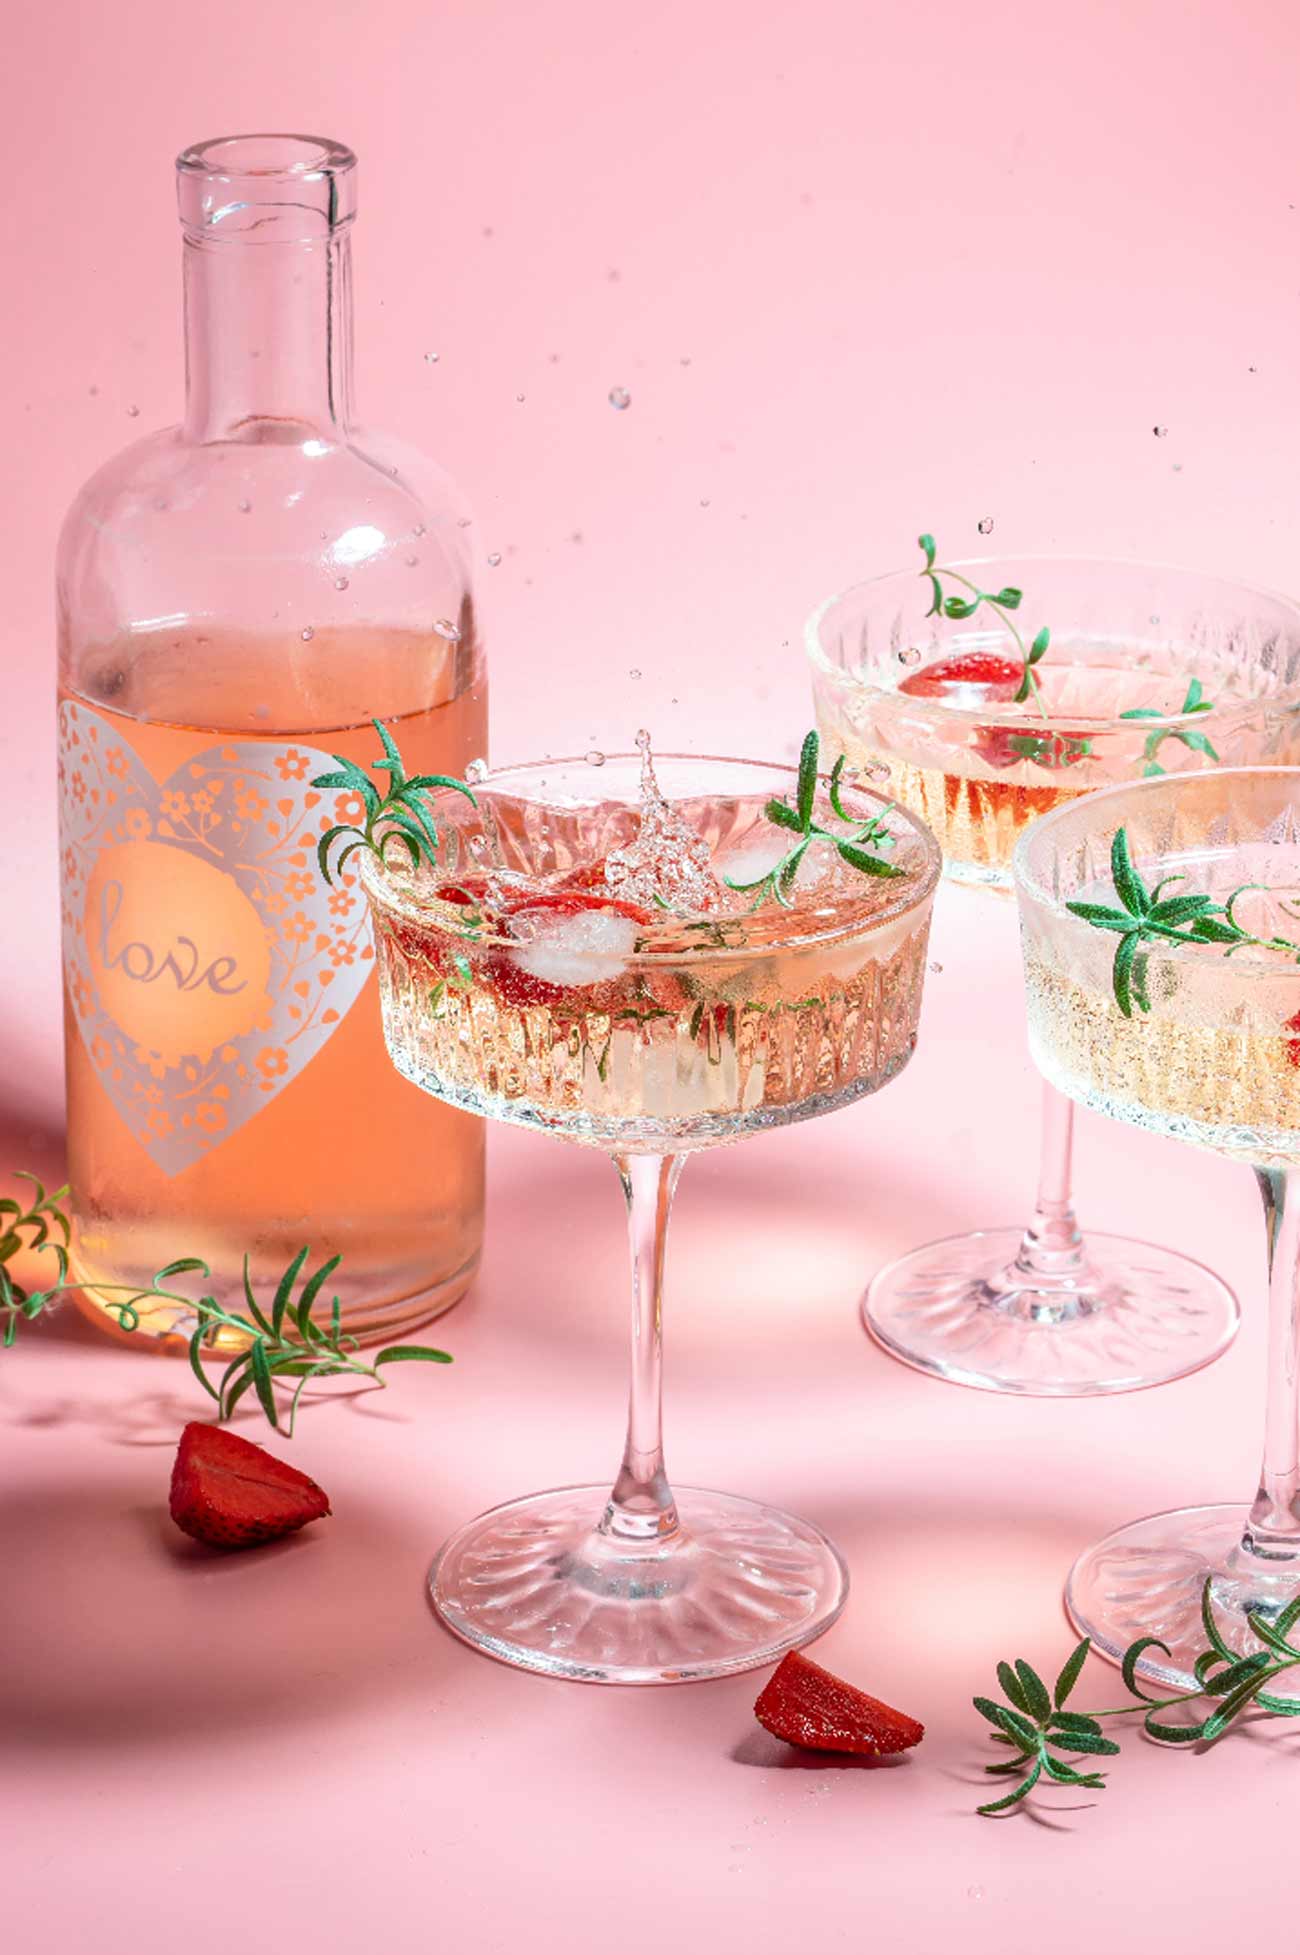 Valentine's party ideas mimosa bar